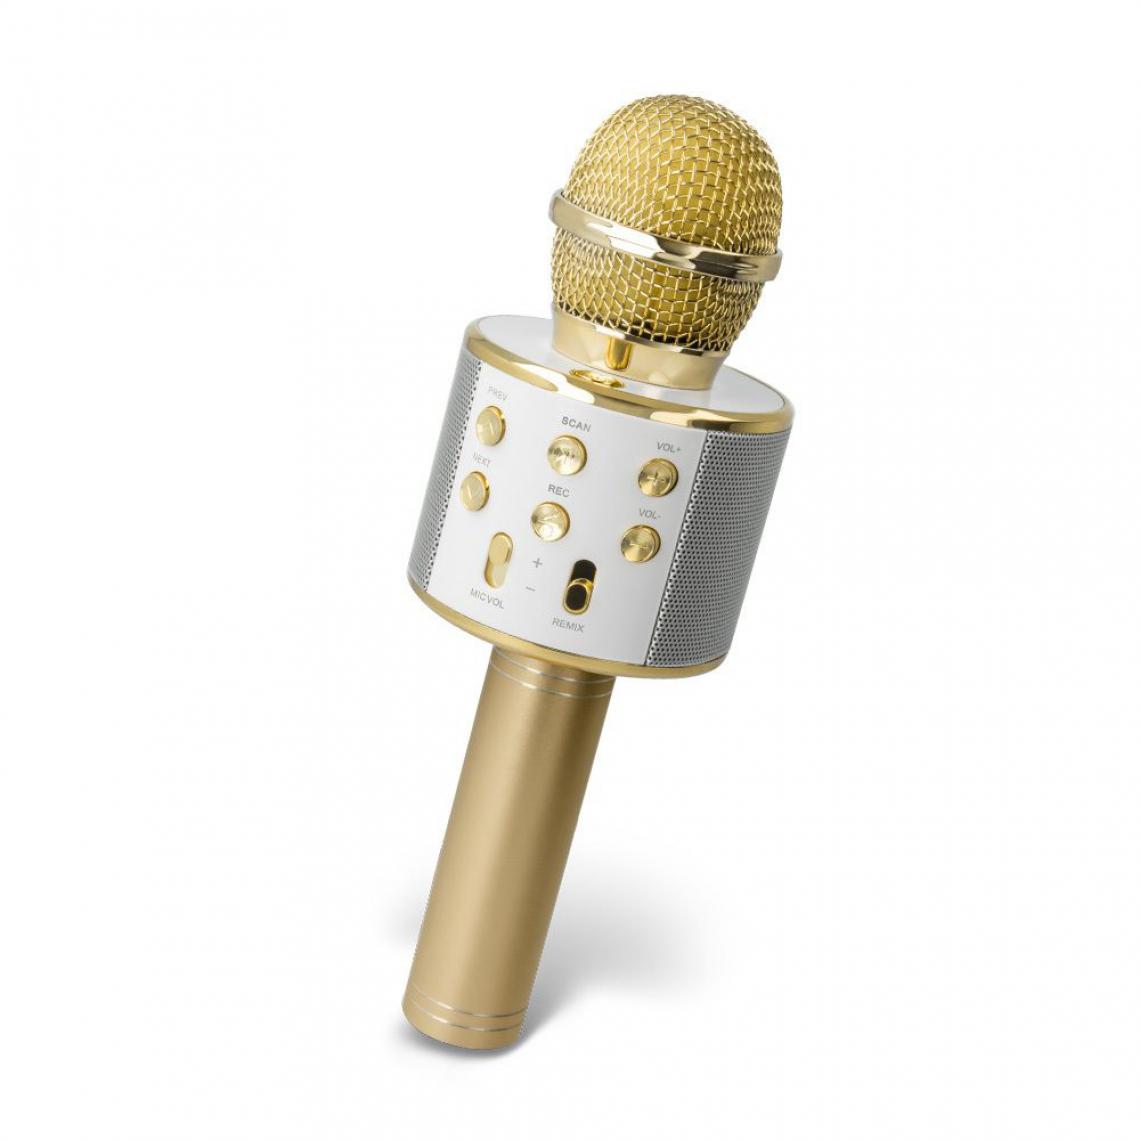 Ozzzo - Microphone Karaoke bluetooth haut parleur ozzzo Gold Or pour Huawei Honor 8x Max - Autres accessoires smartphone